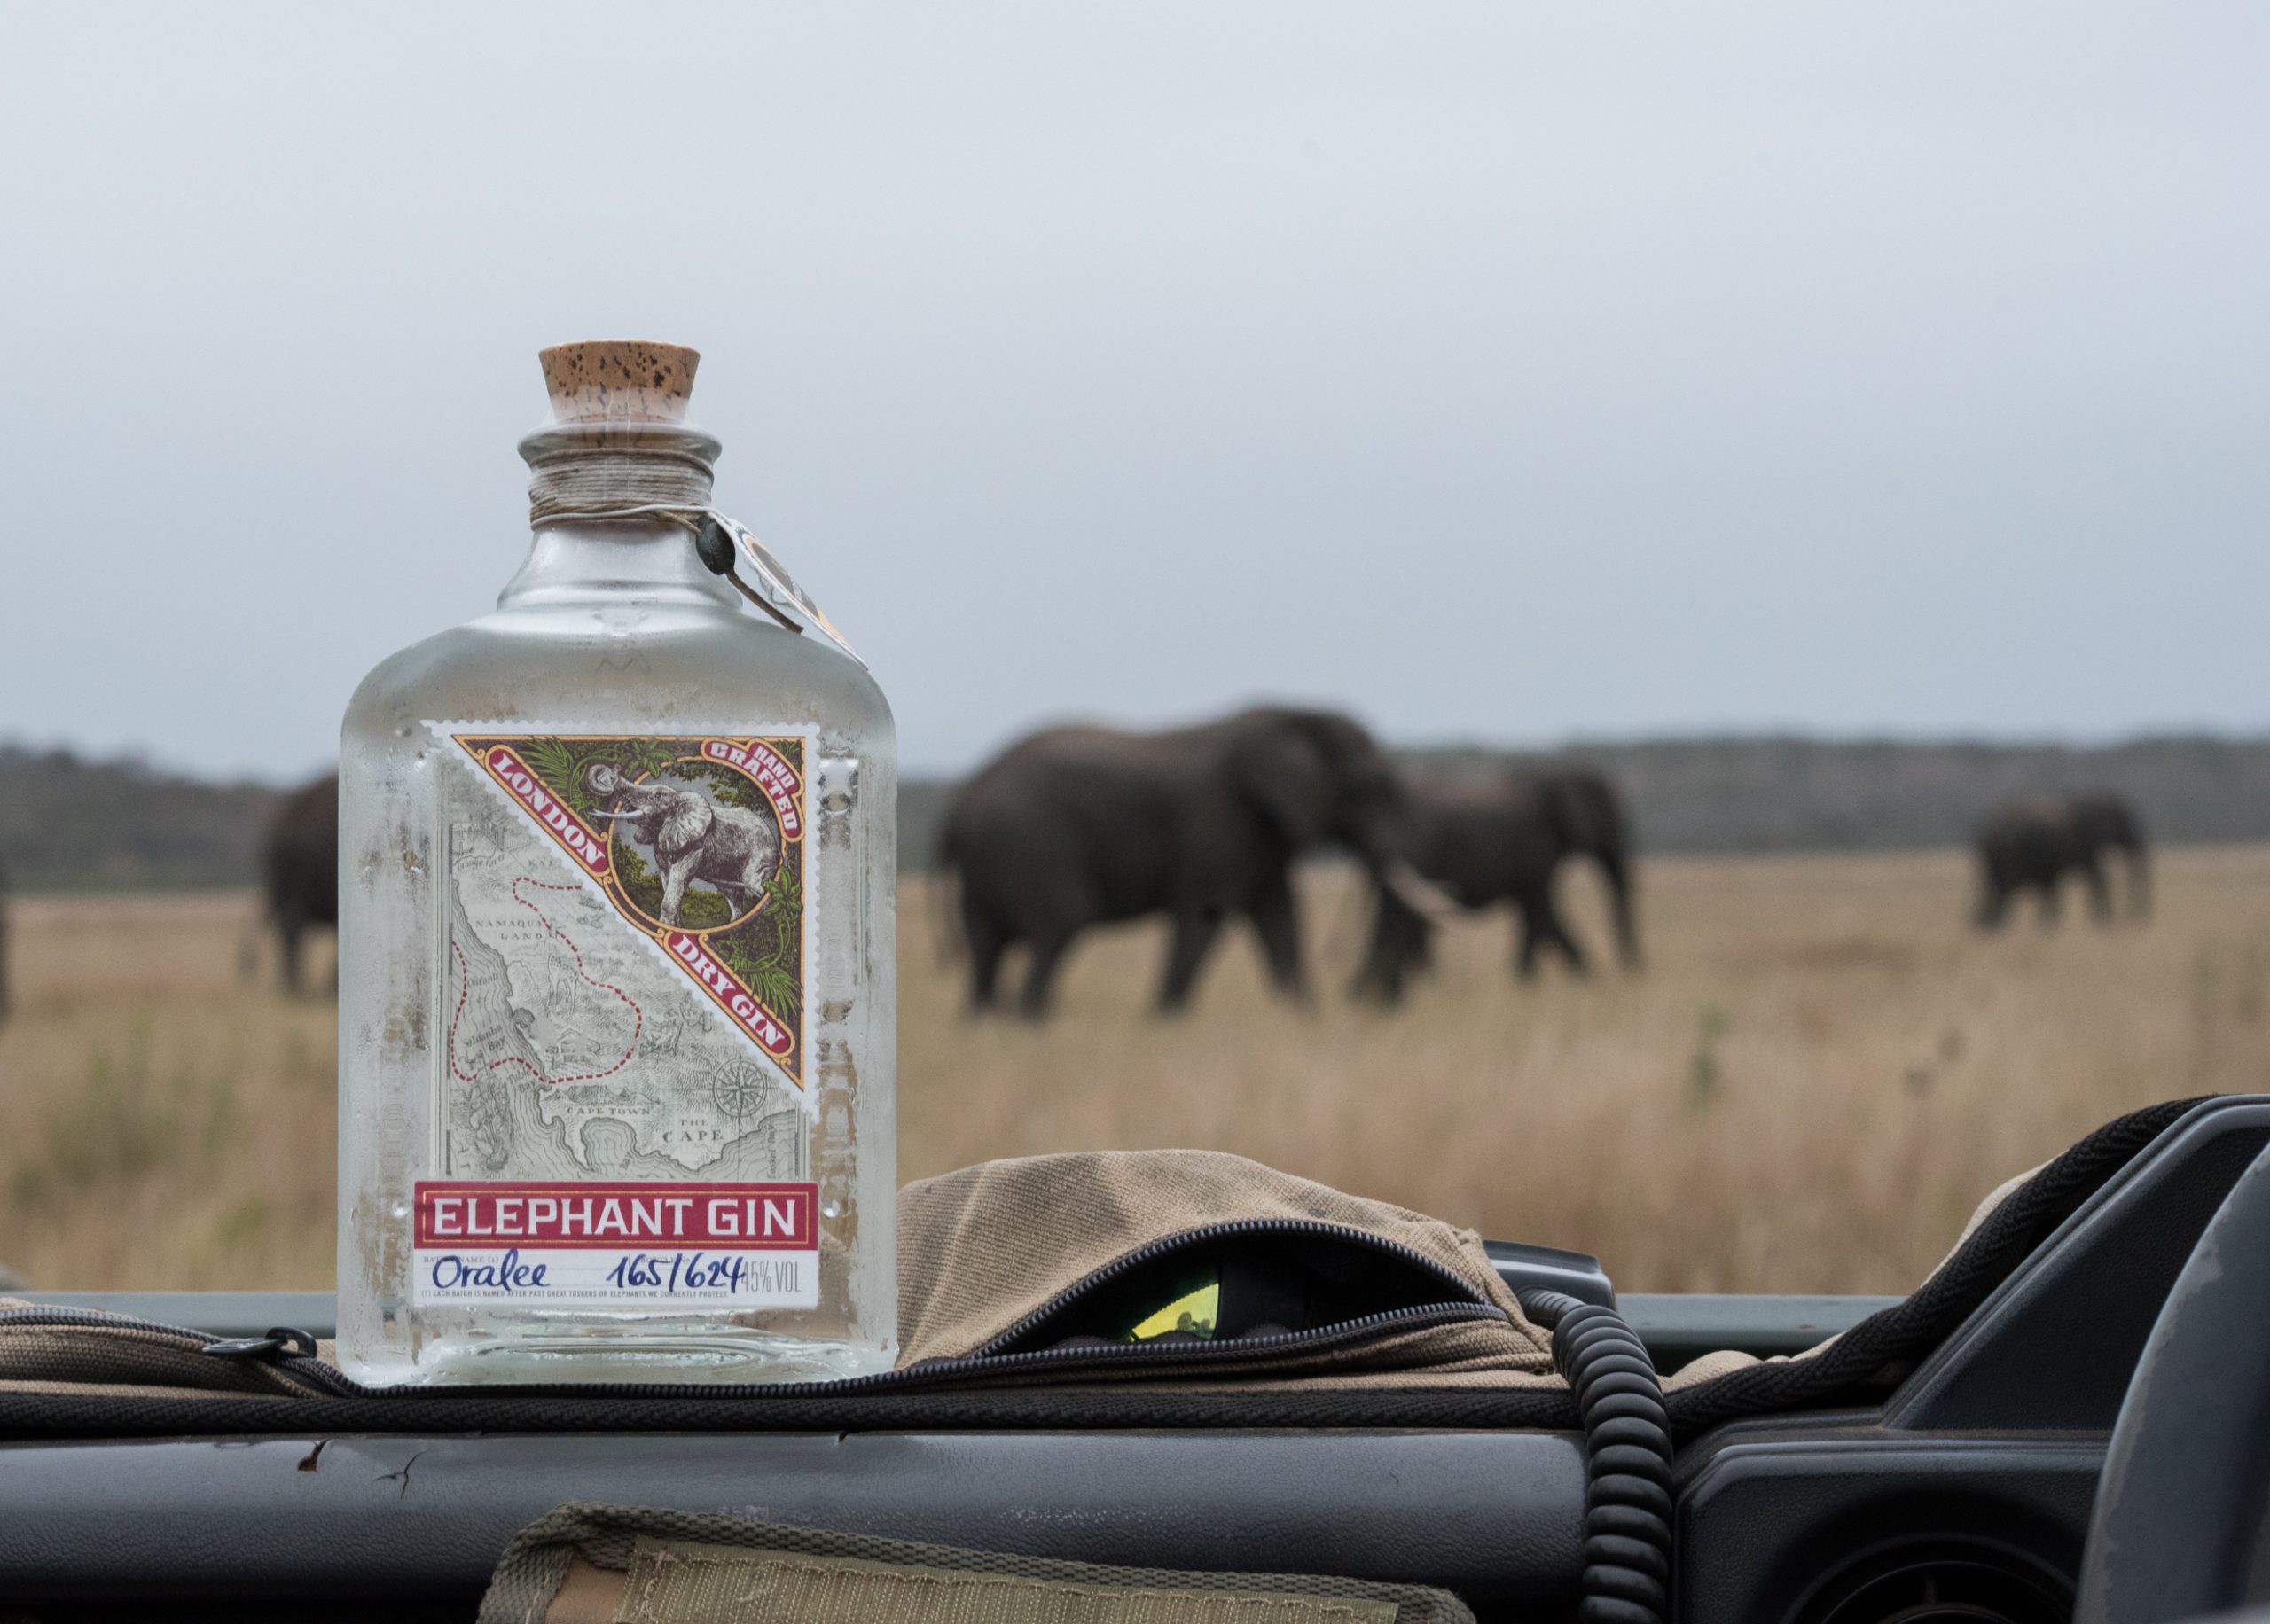 Elephant Gin launches new 15% lighter bottle